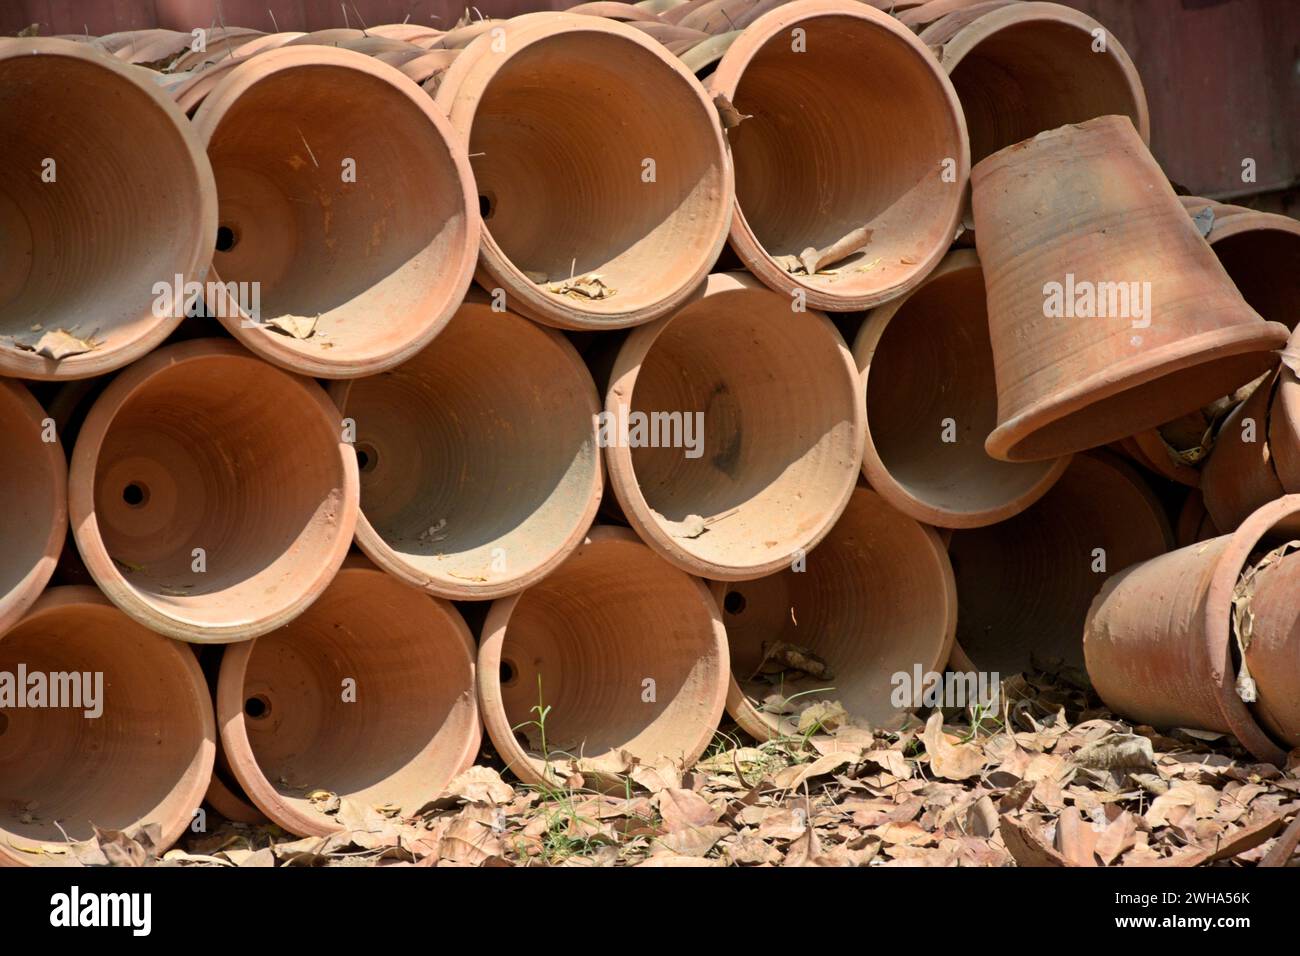 clay pots in Sunder Nursery Delhi’s Heritage Park Stock Photo